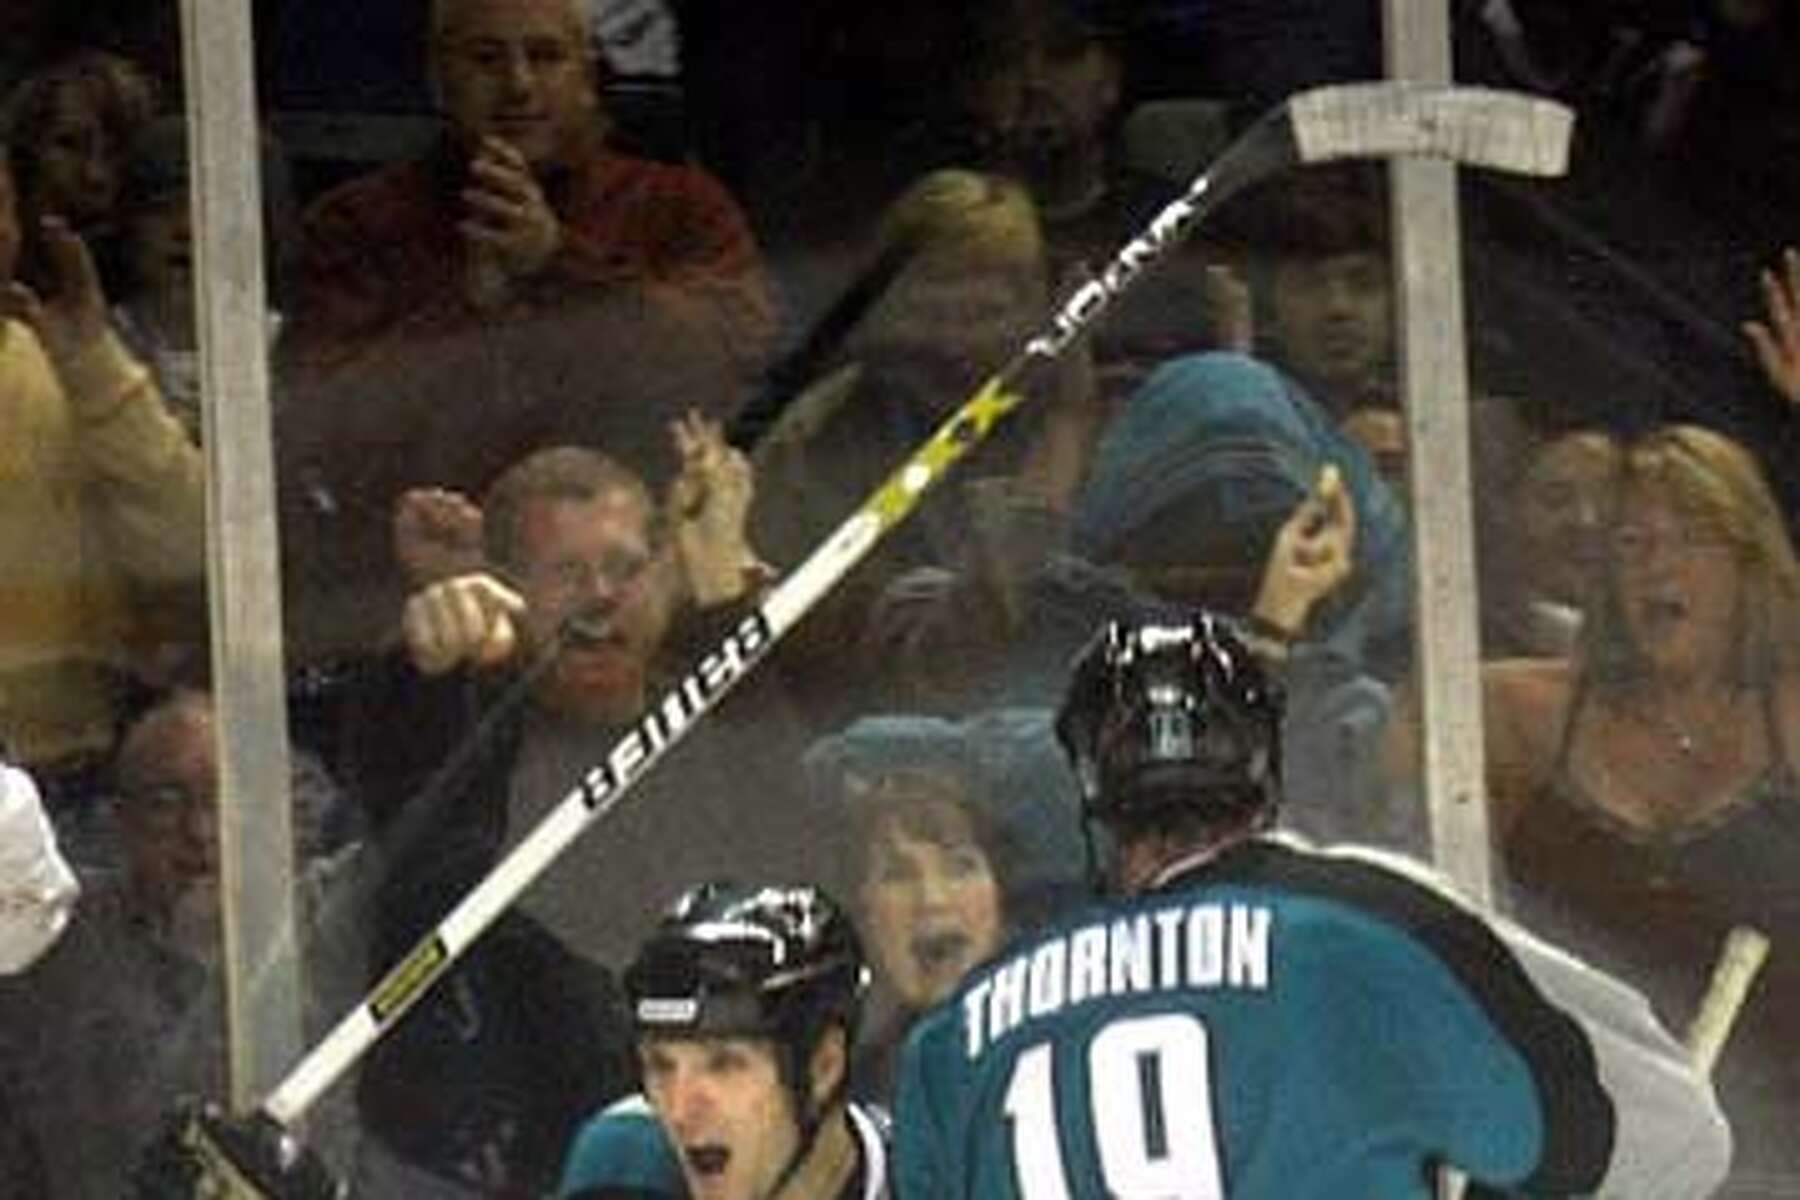 Joe Thornton San Jose Sharks Editorial Image - Image of stick